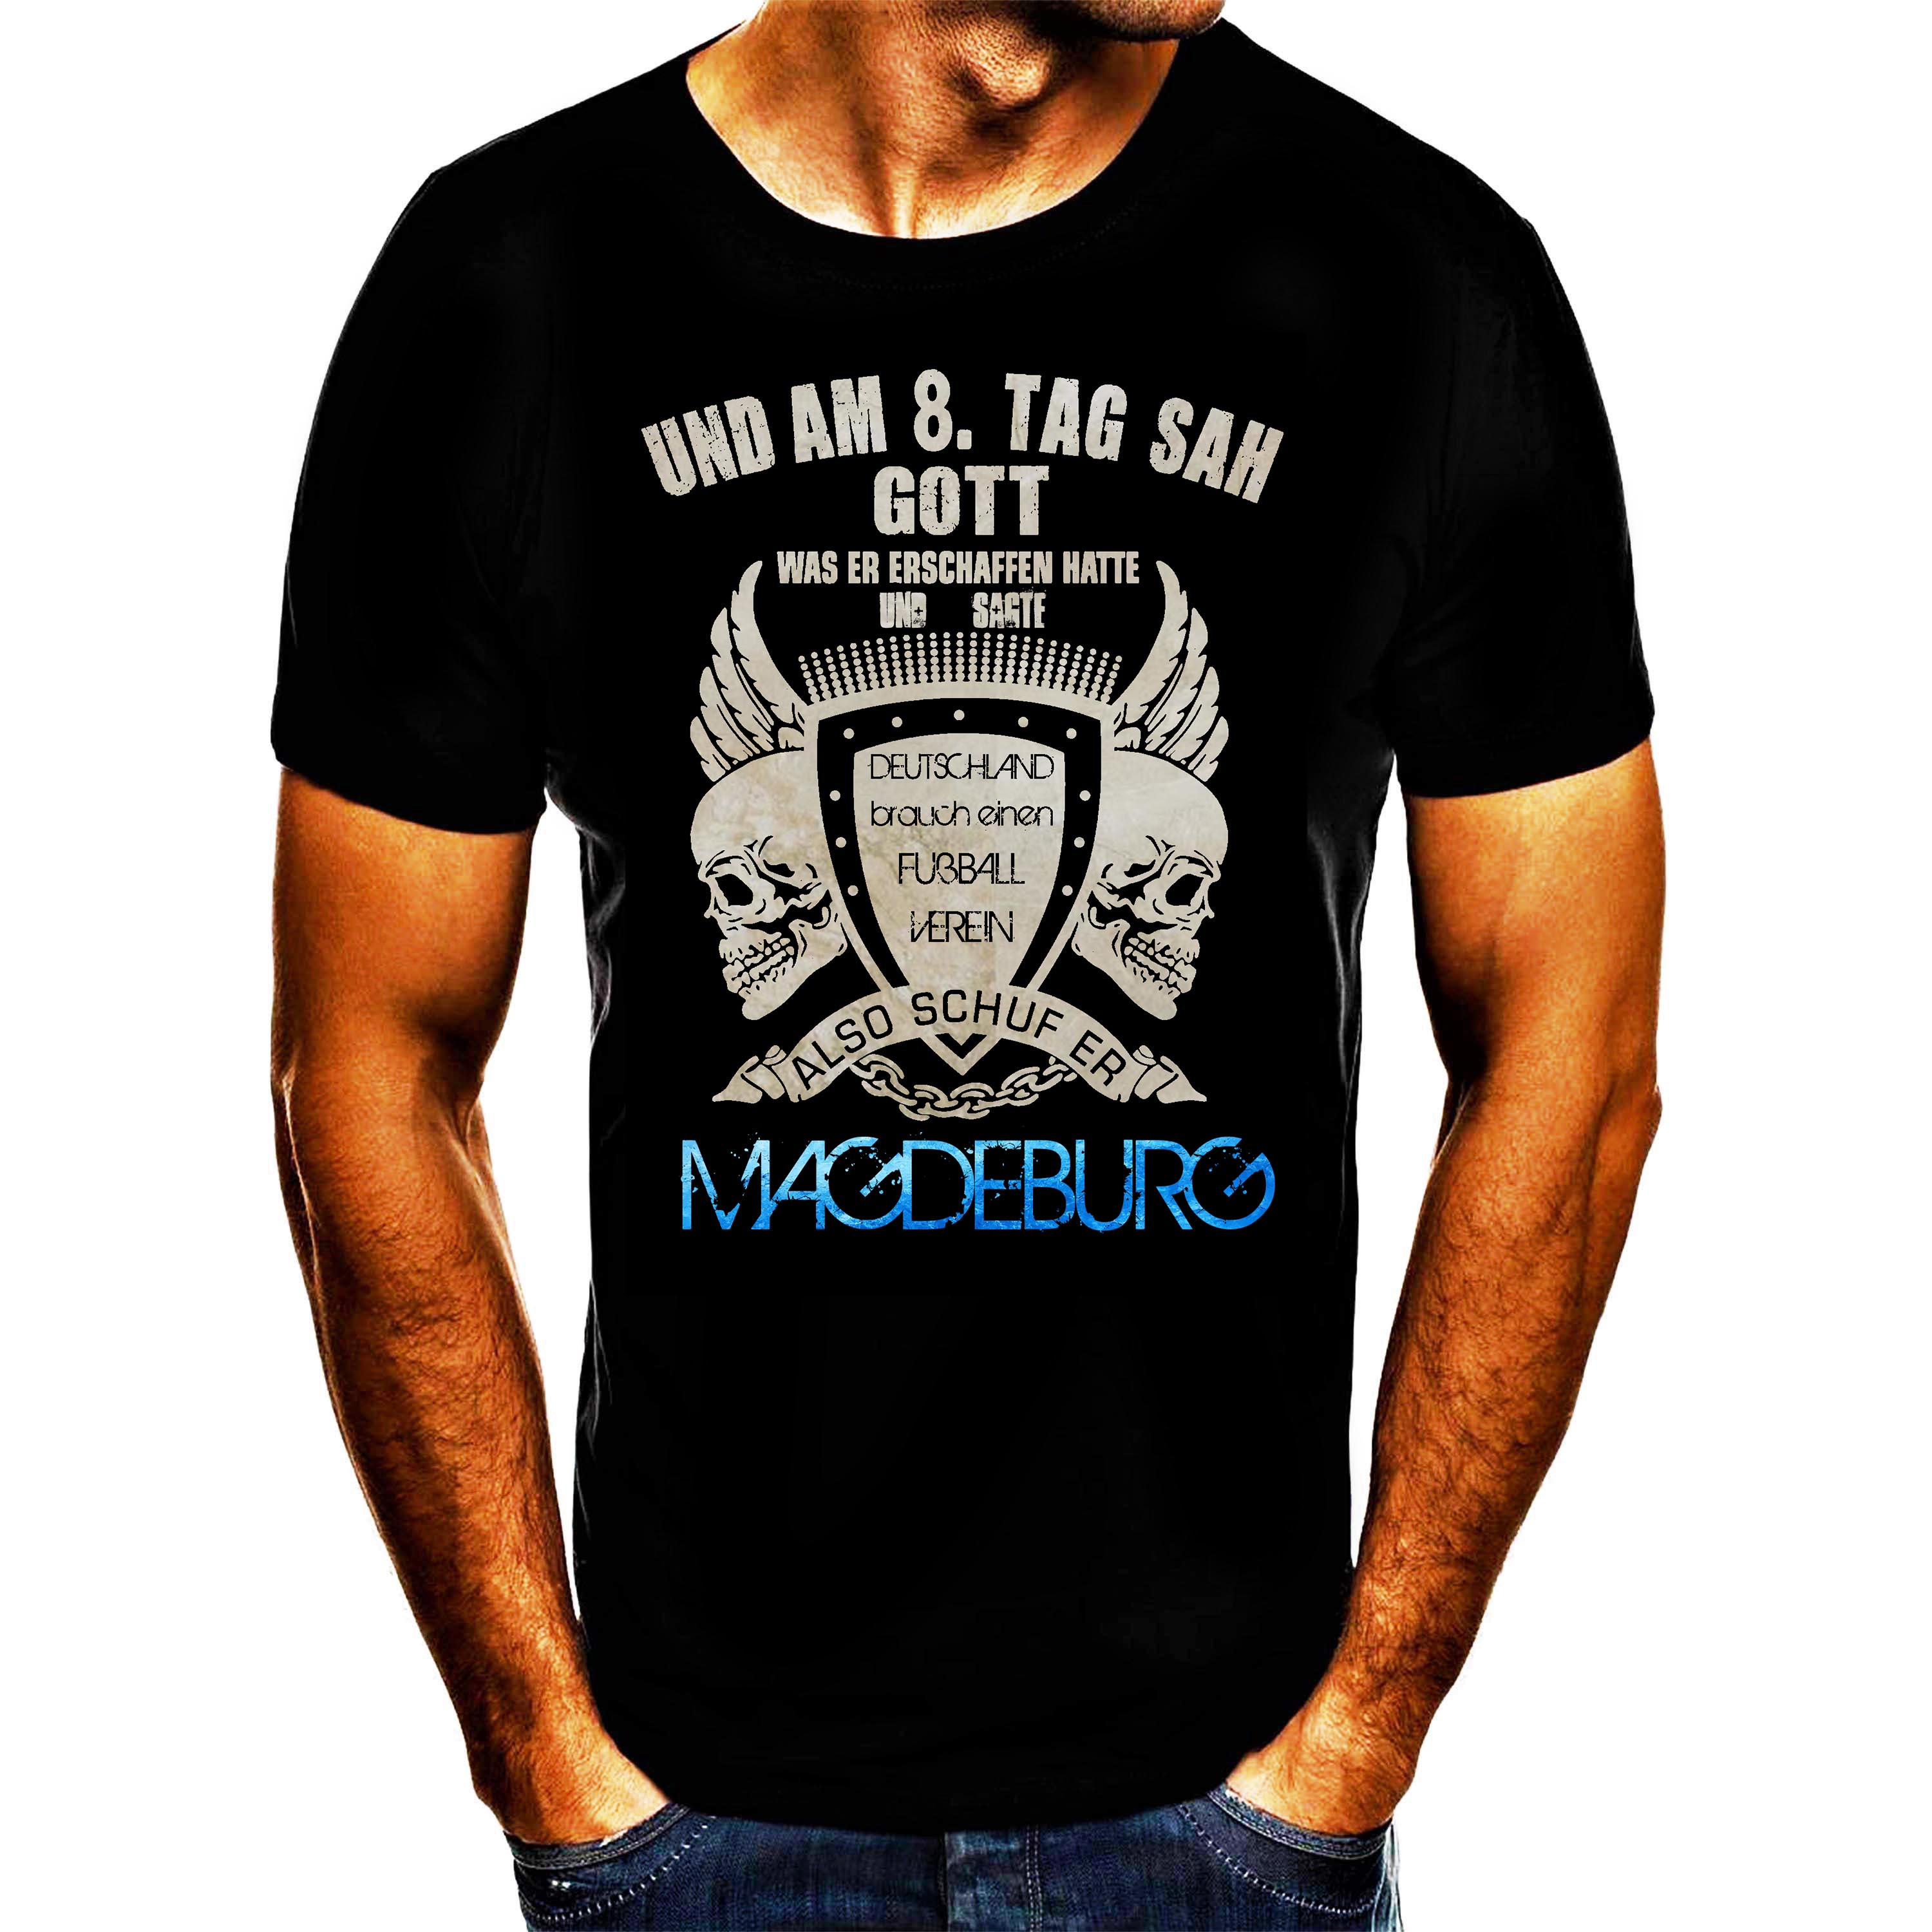 Shirtbude T-shirt met Magdeburg-print